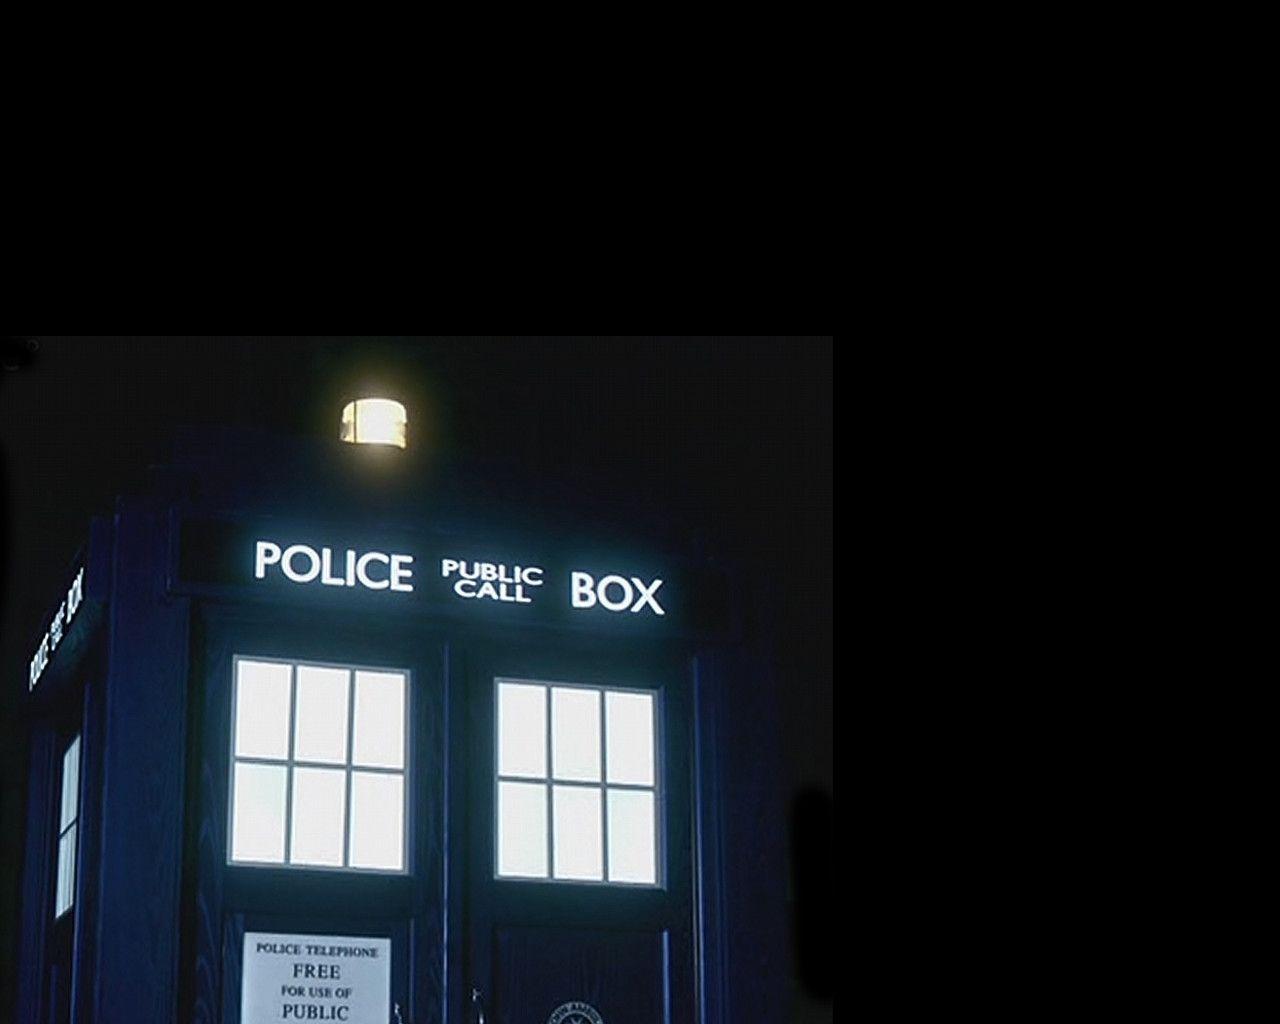 Download Doctor Who Tardis Wallpaper HD Wallpaper 1280x1024PX